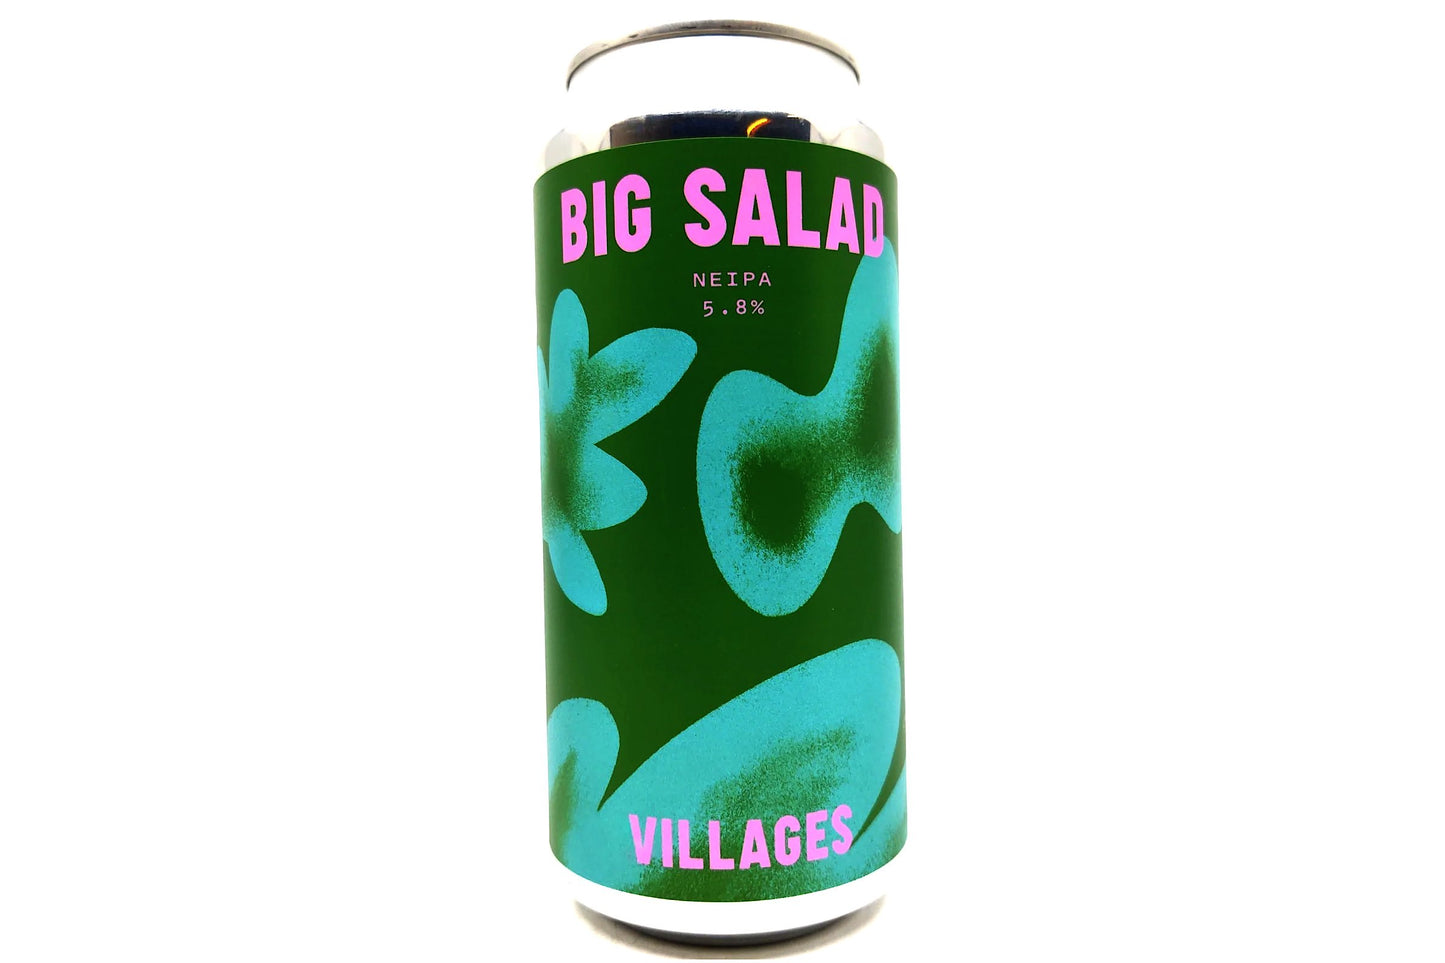 Villages Big Salad New England IPA (5.8%) 440ml Can